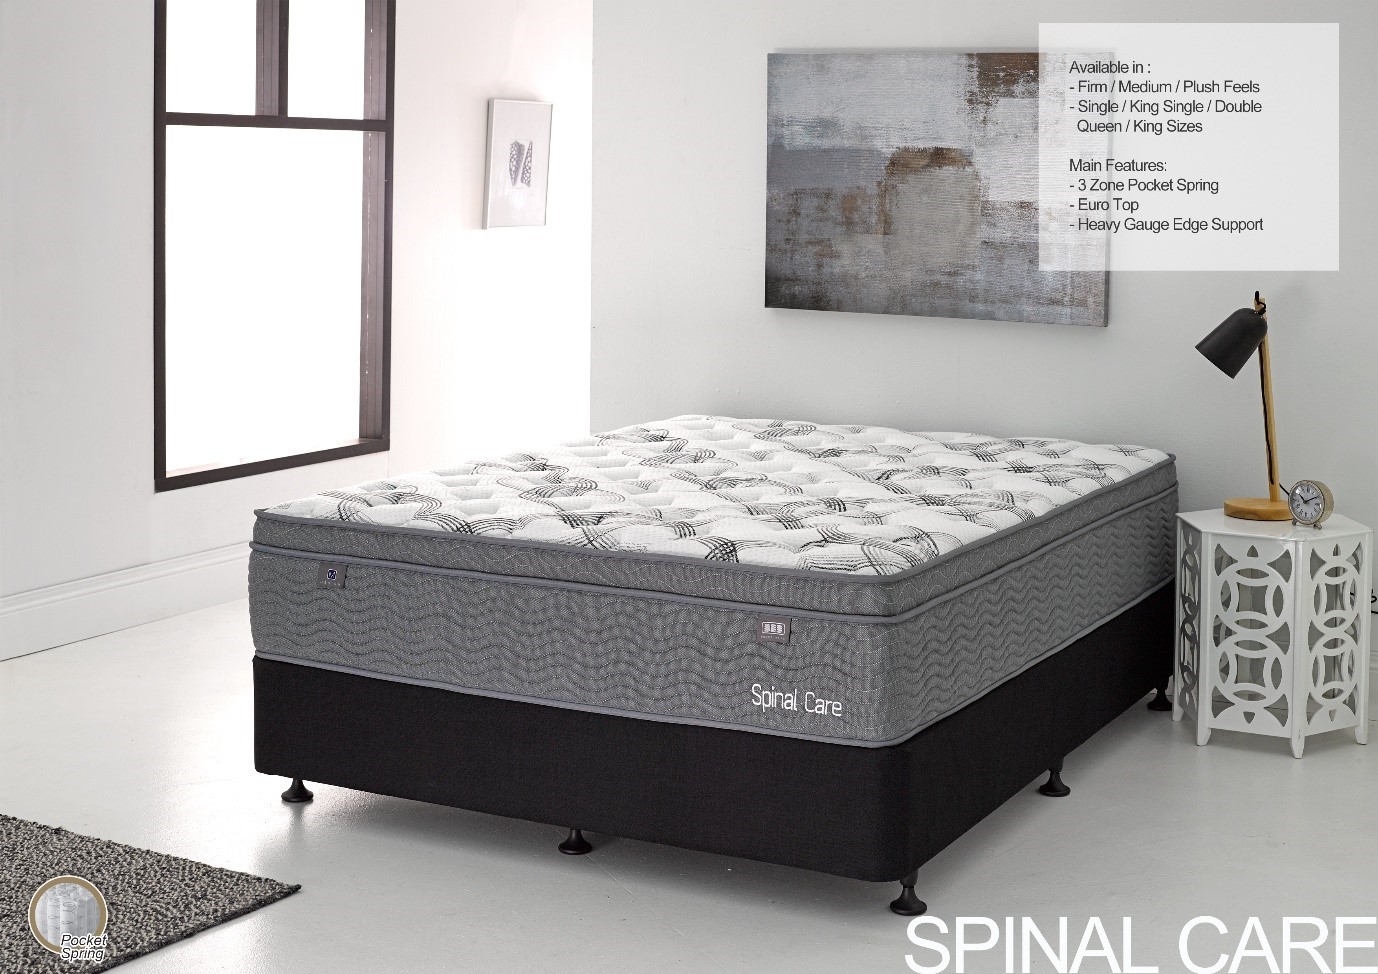 spinal care bedding mattress reviews